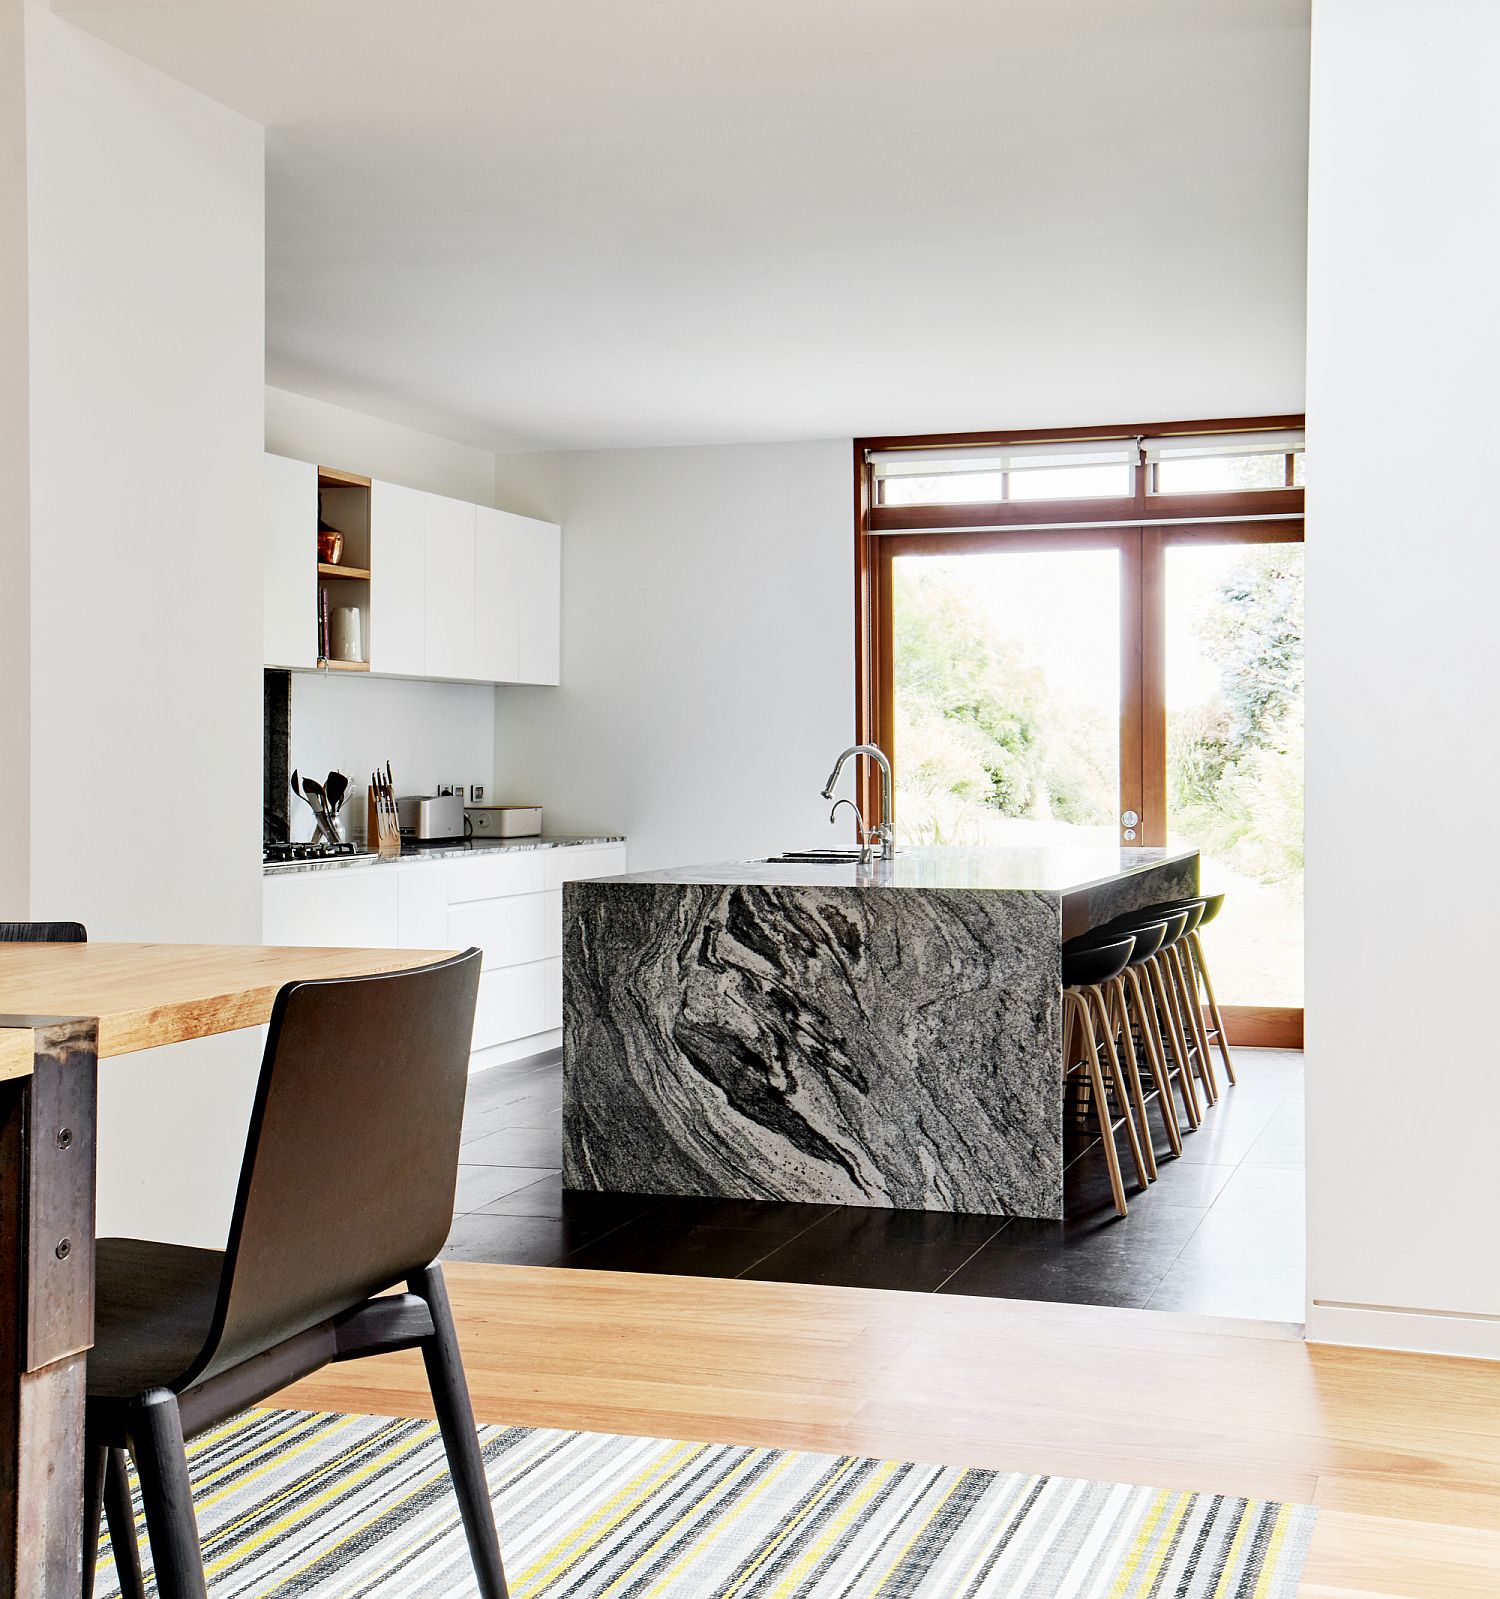 Stunning-stone-kitchen-island-steals-the-spotlight-in-this-all-white-kitchen